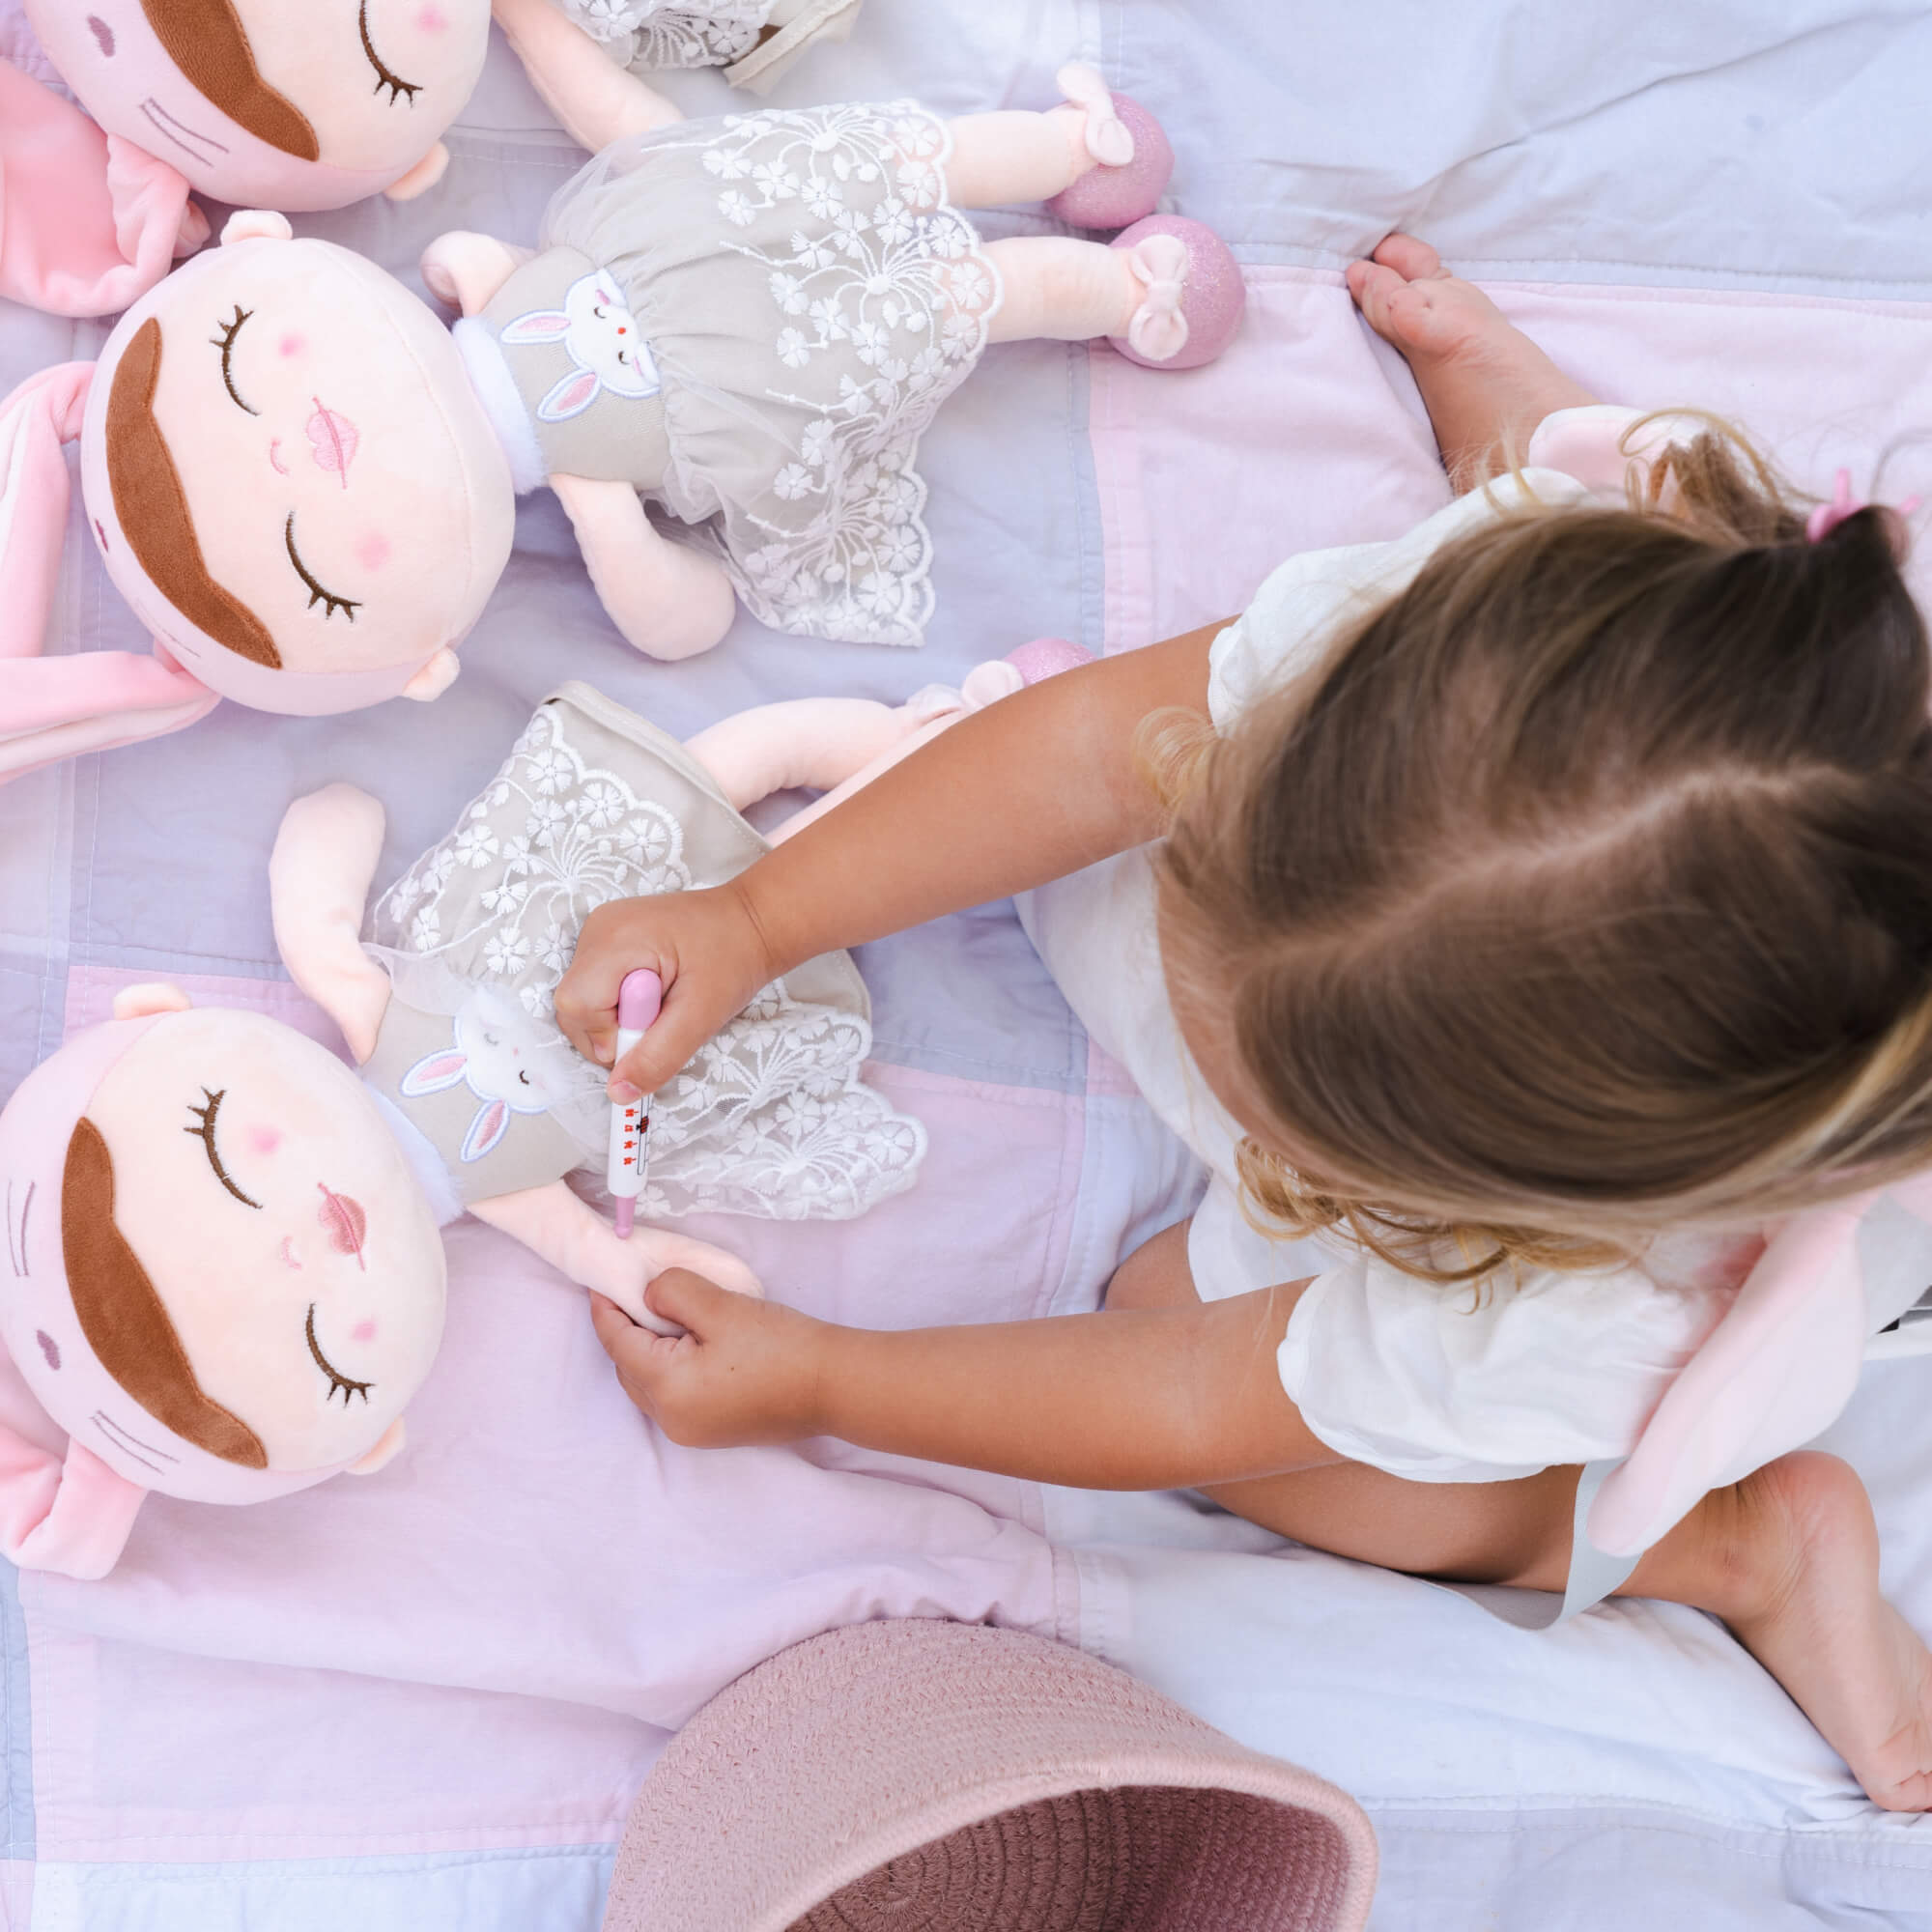 Child playing with Dreambaby rag doll super soft plush rabbit